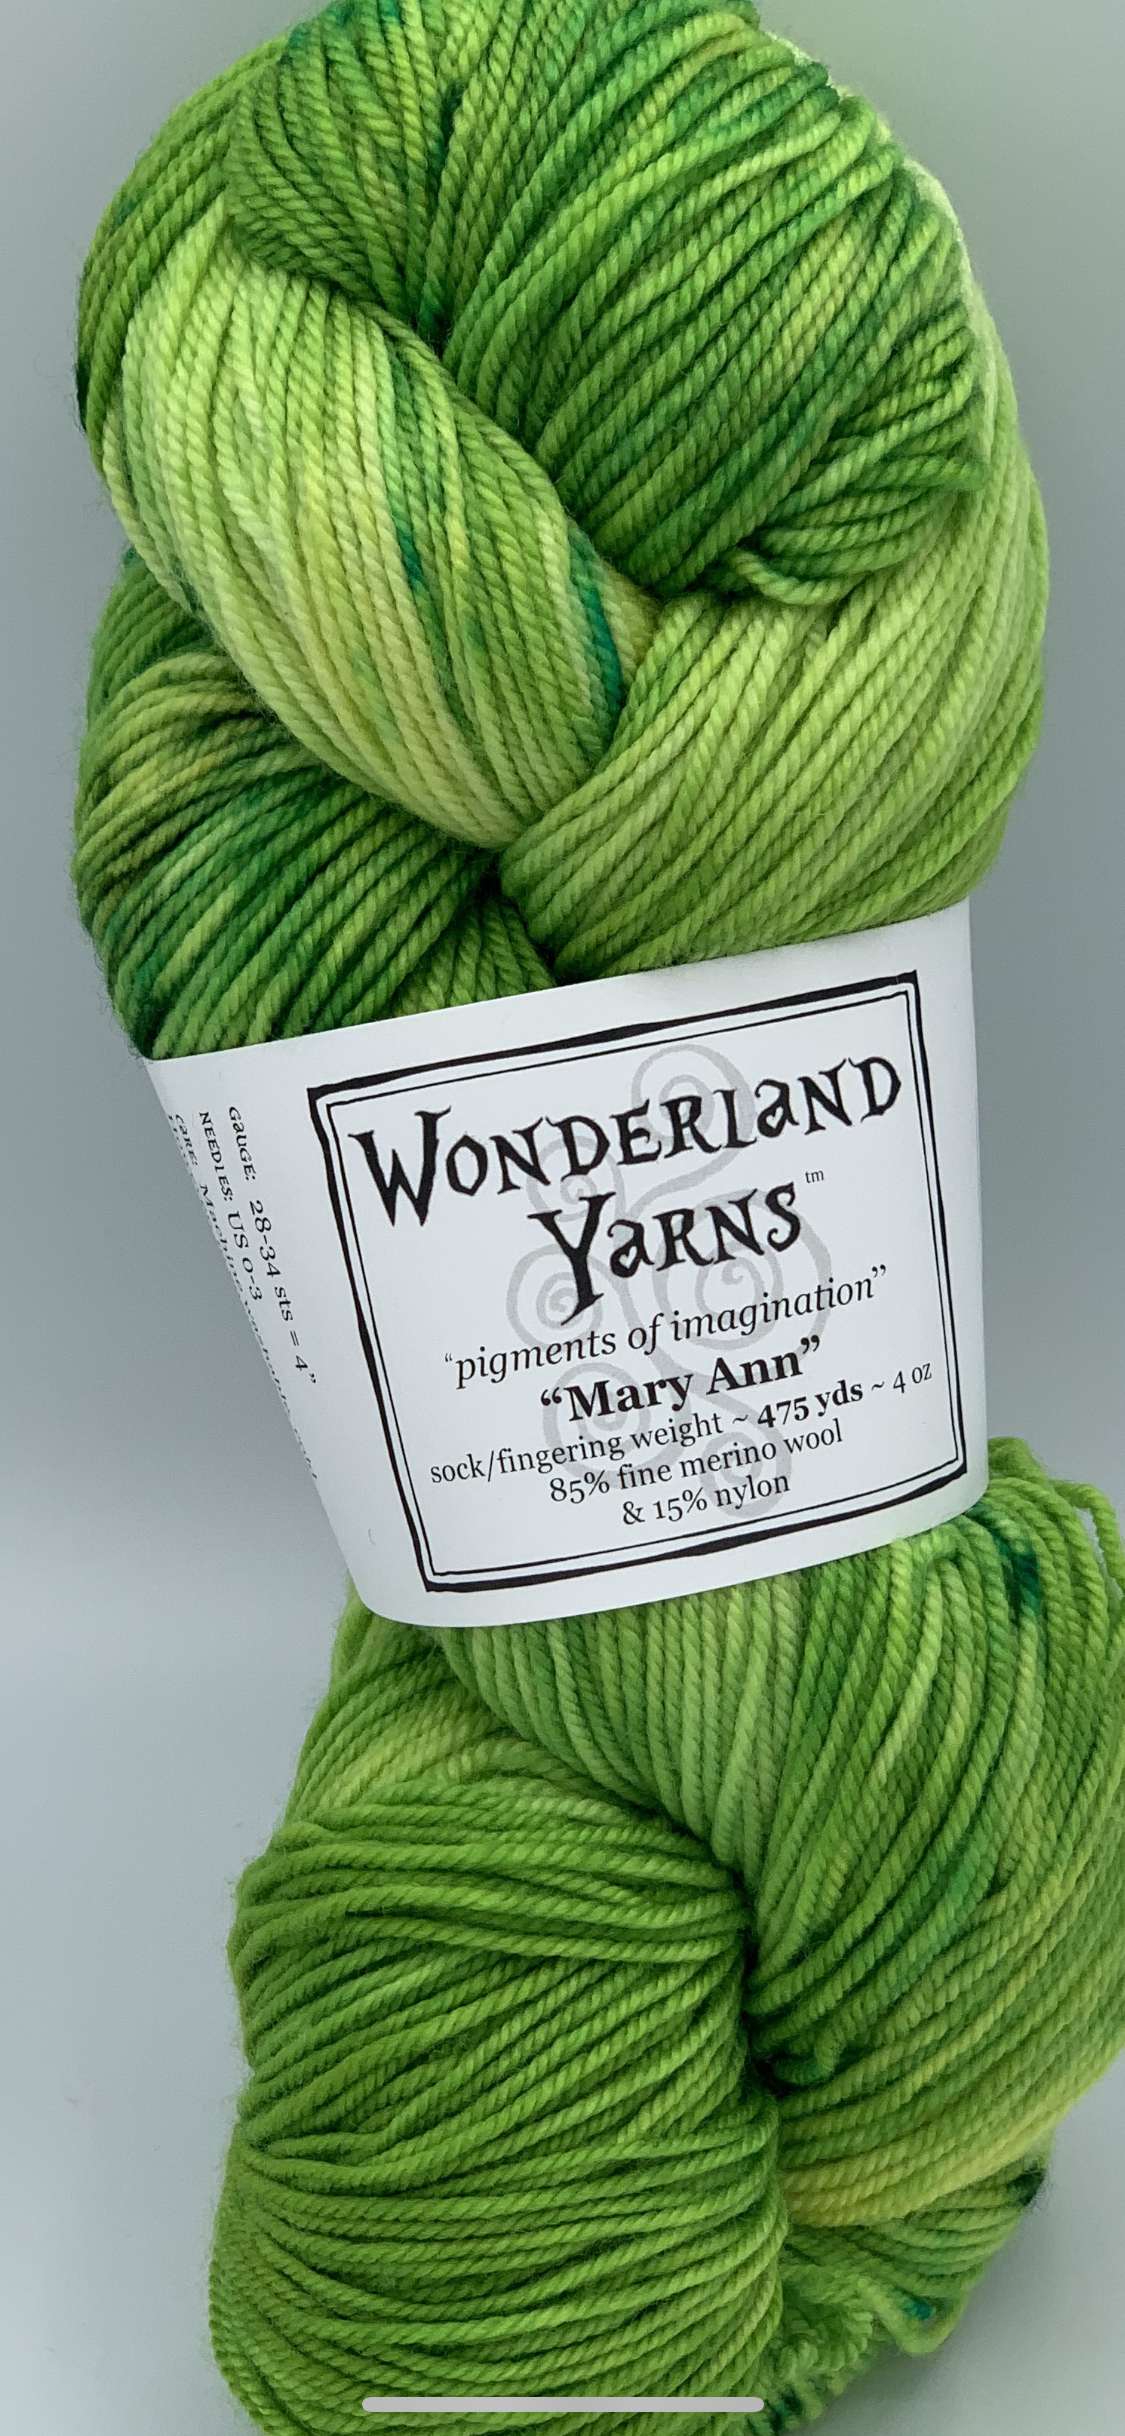 Wonderland Yarns Mary Ann